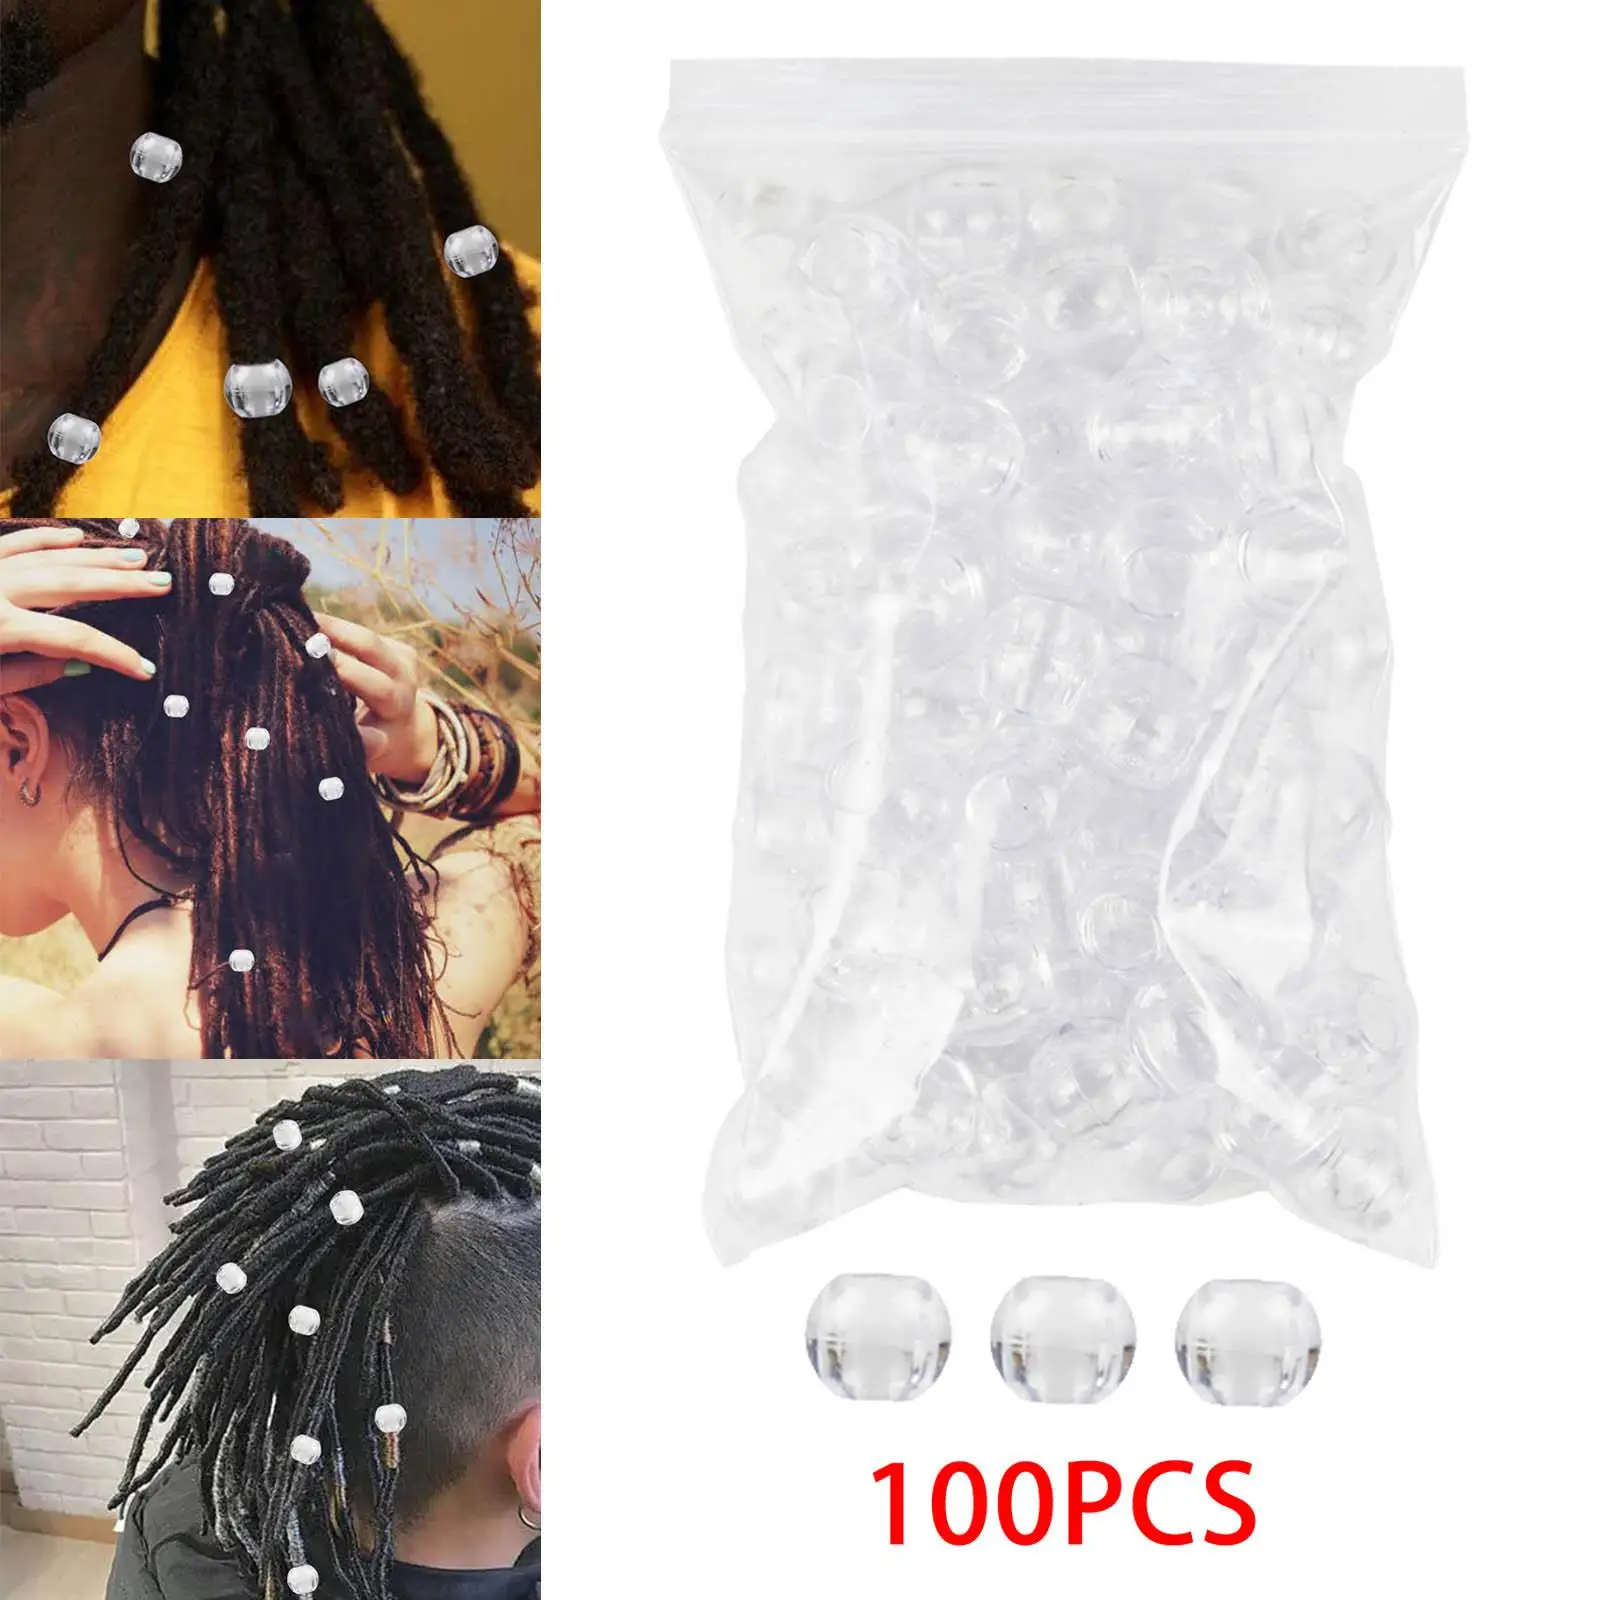 100Pcs Dreadlock Hair Beads 16mm Dia Big Hole Plastic Clear Hair Bead for Dreadlock Wig Jewelry Making Link Hair Wedding Adults